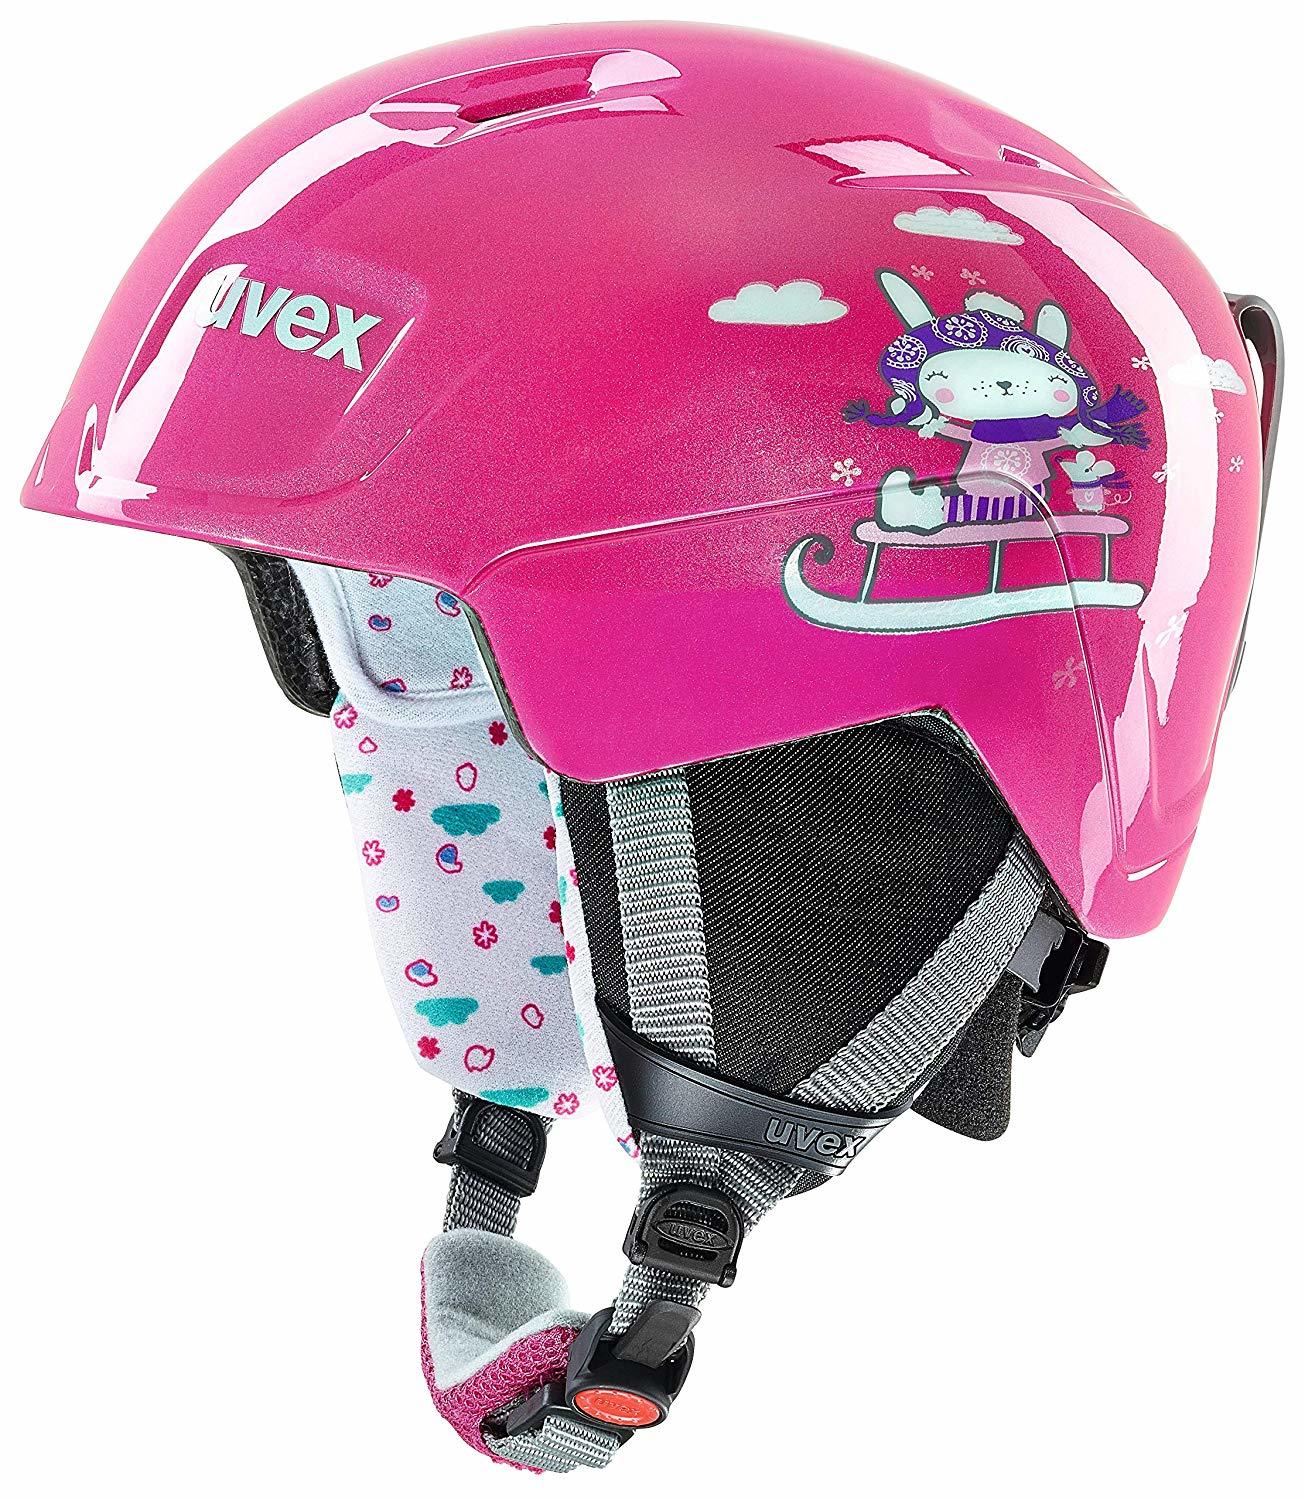 kids pink ski helmet